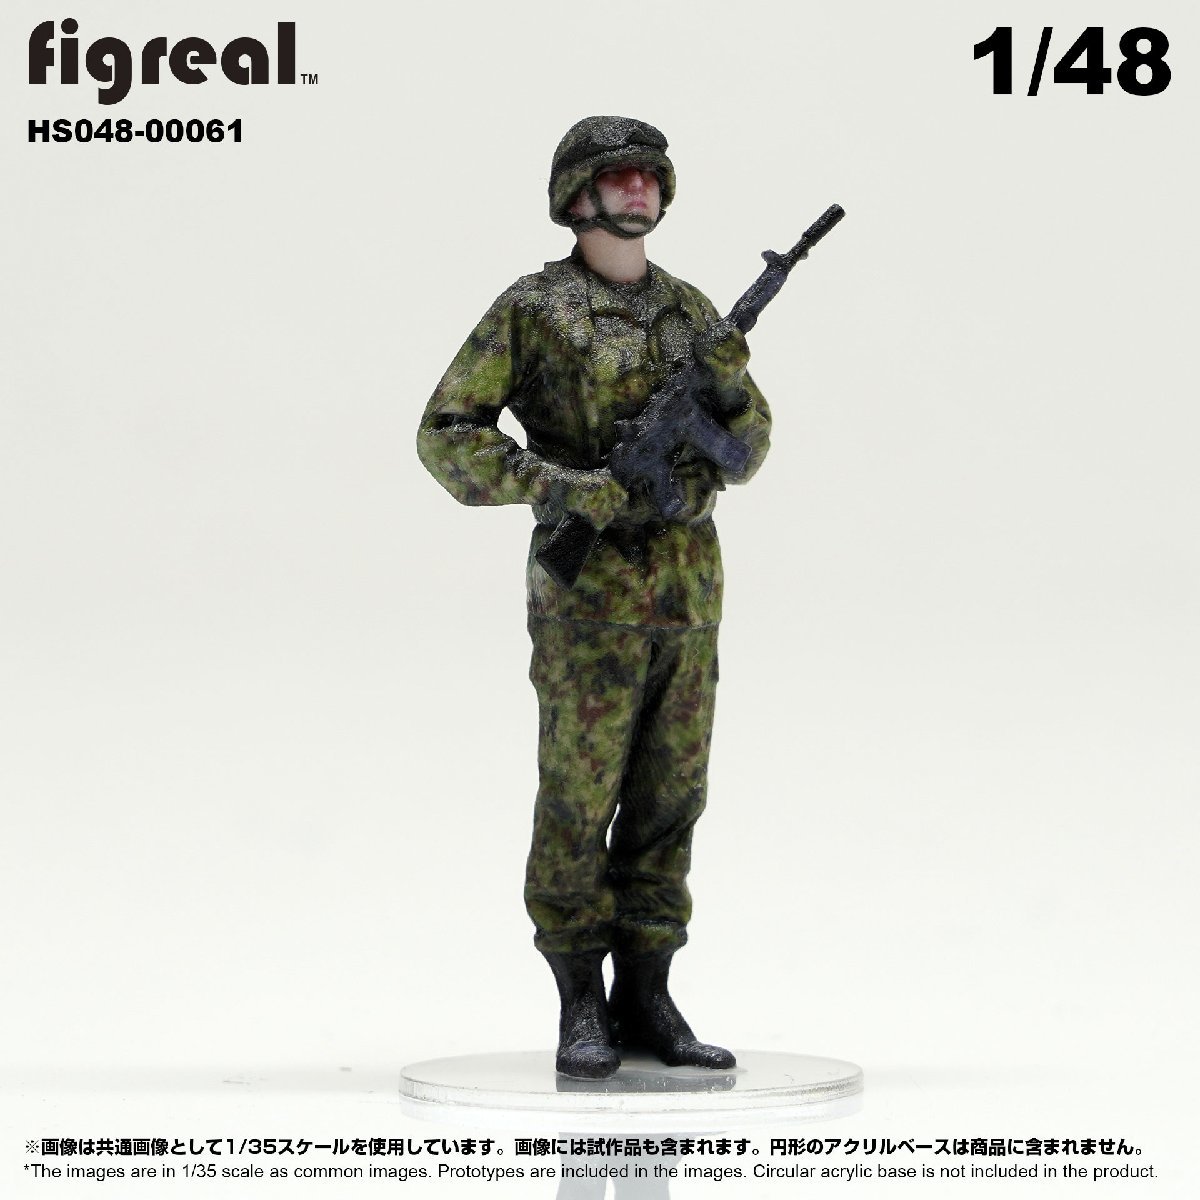 HS048-00061 figreal 陸上自衛隊 1/48 JGSDF 高精細フィギュア_画像1